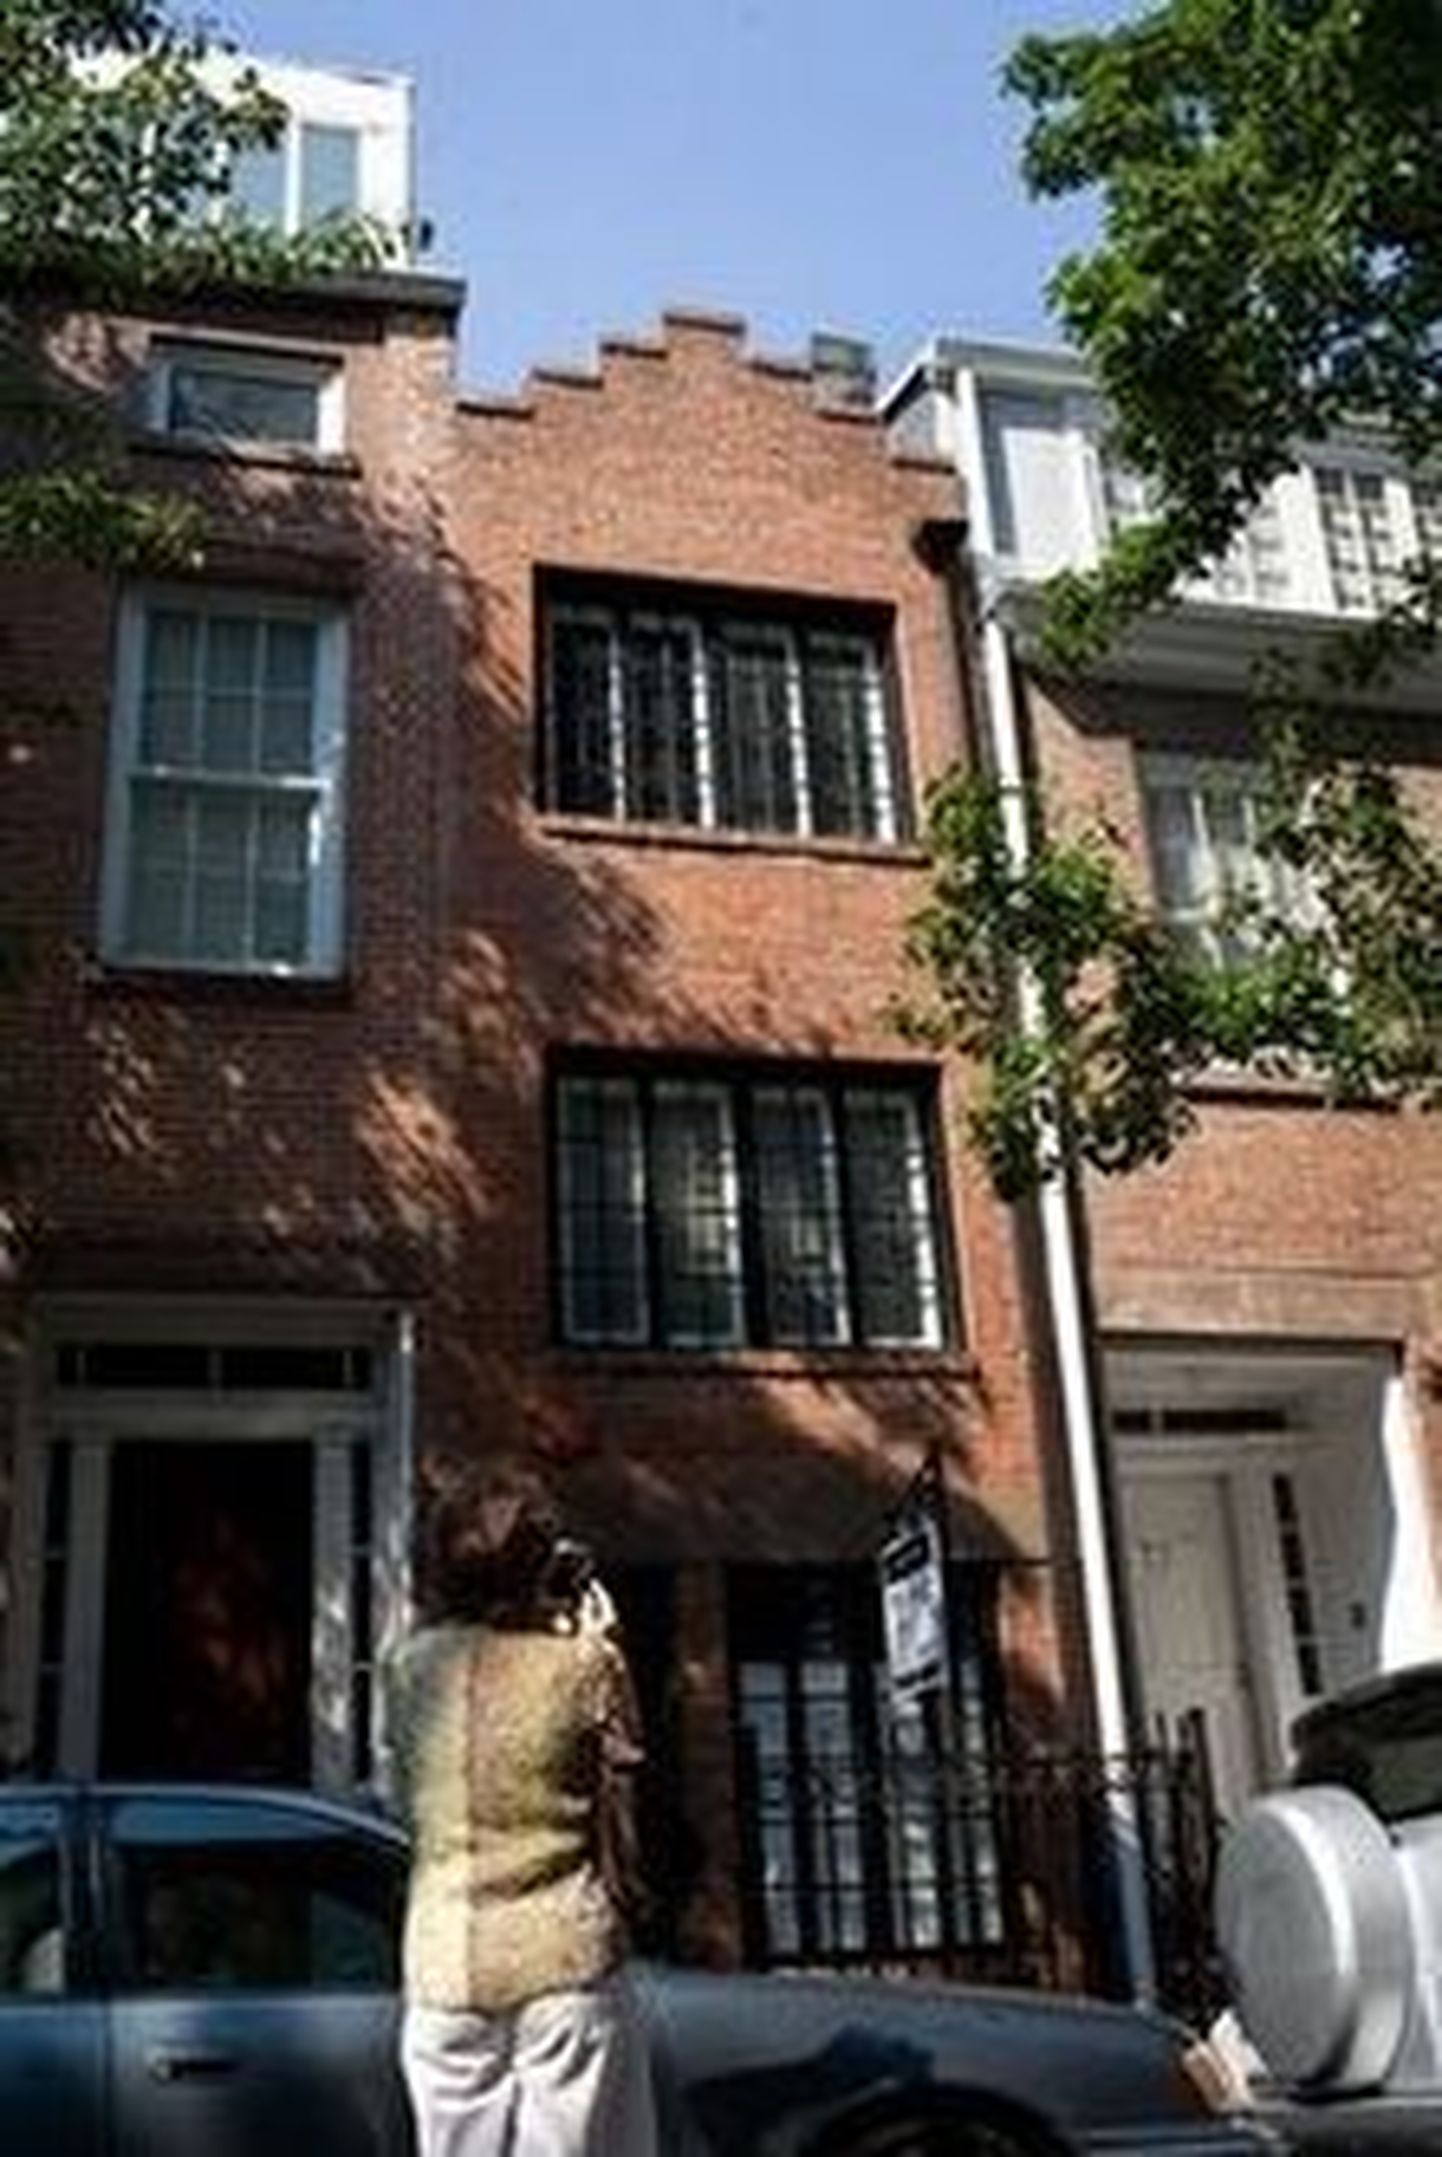 New Yorgi kõige kitsam maja maksab 2,7 miljonit dollarit